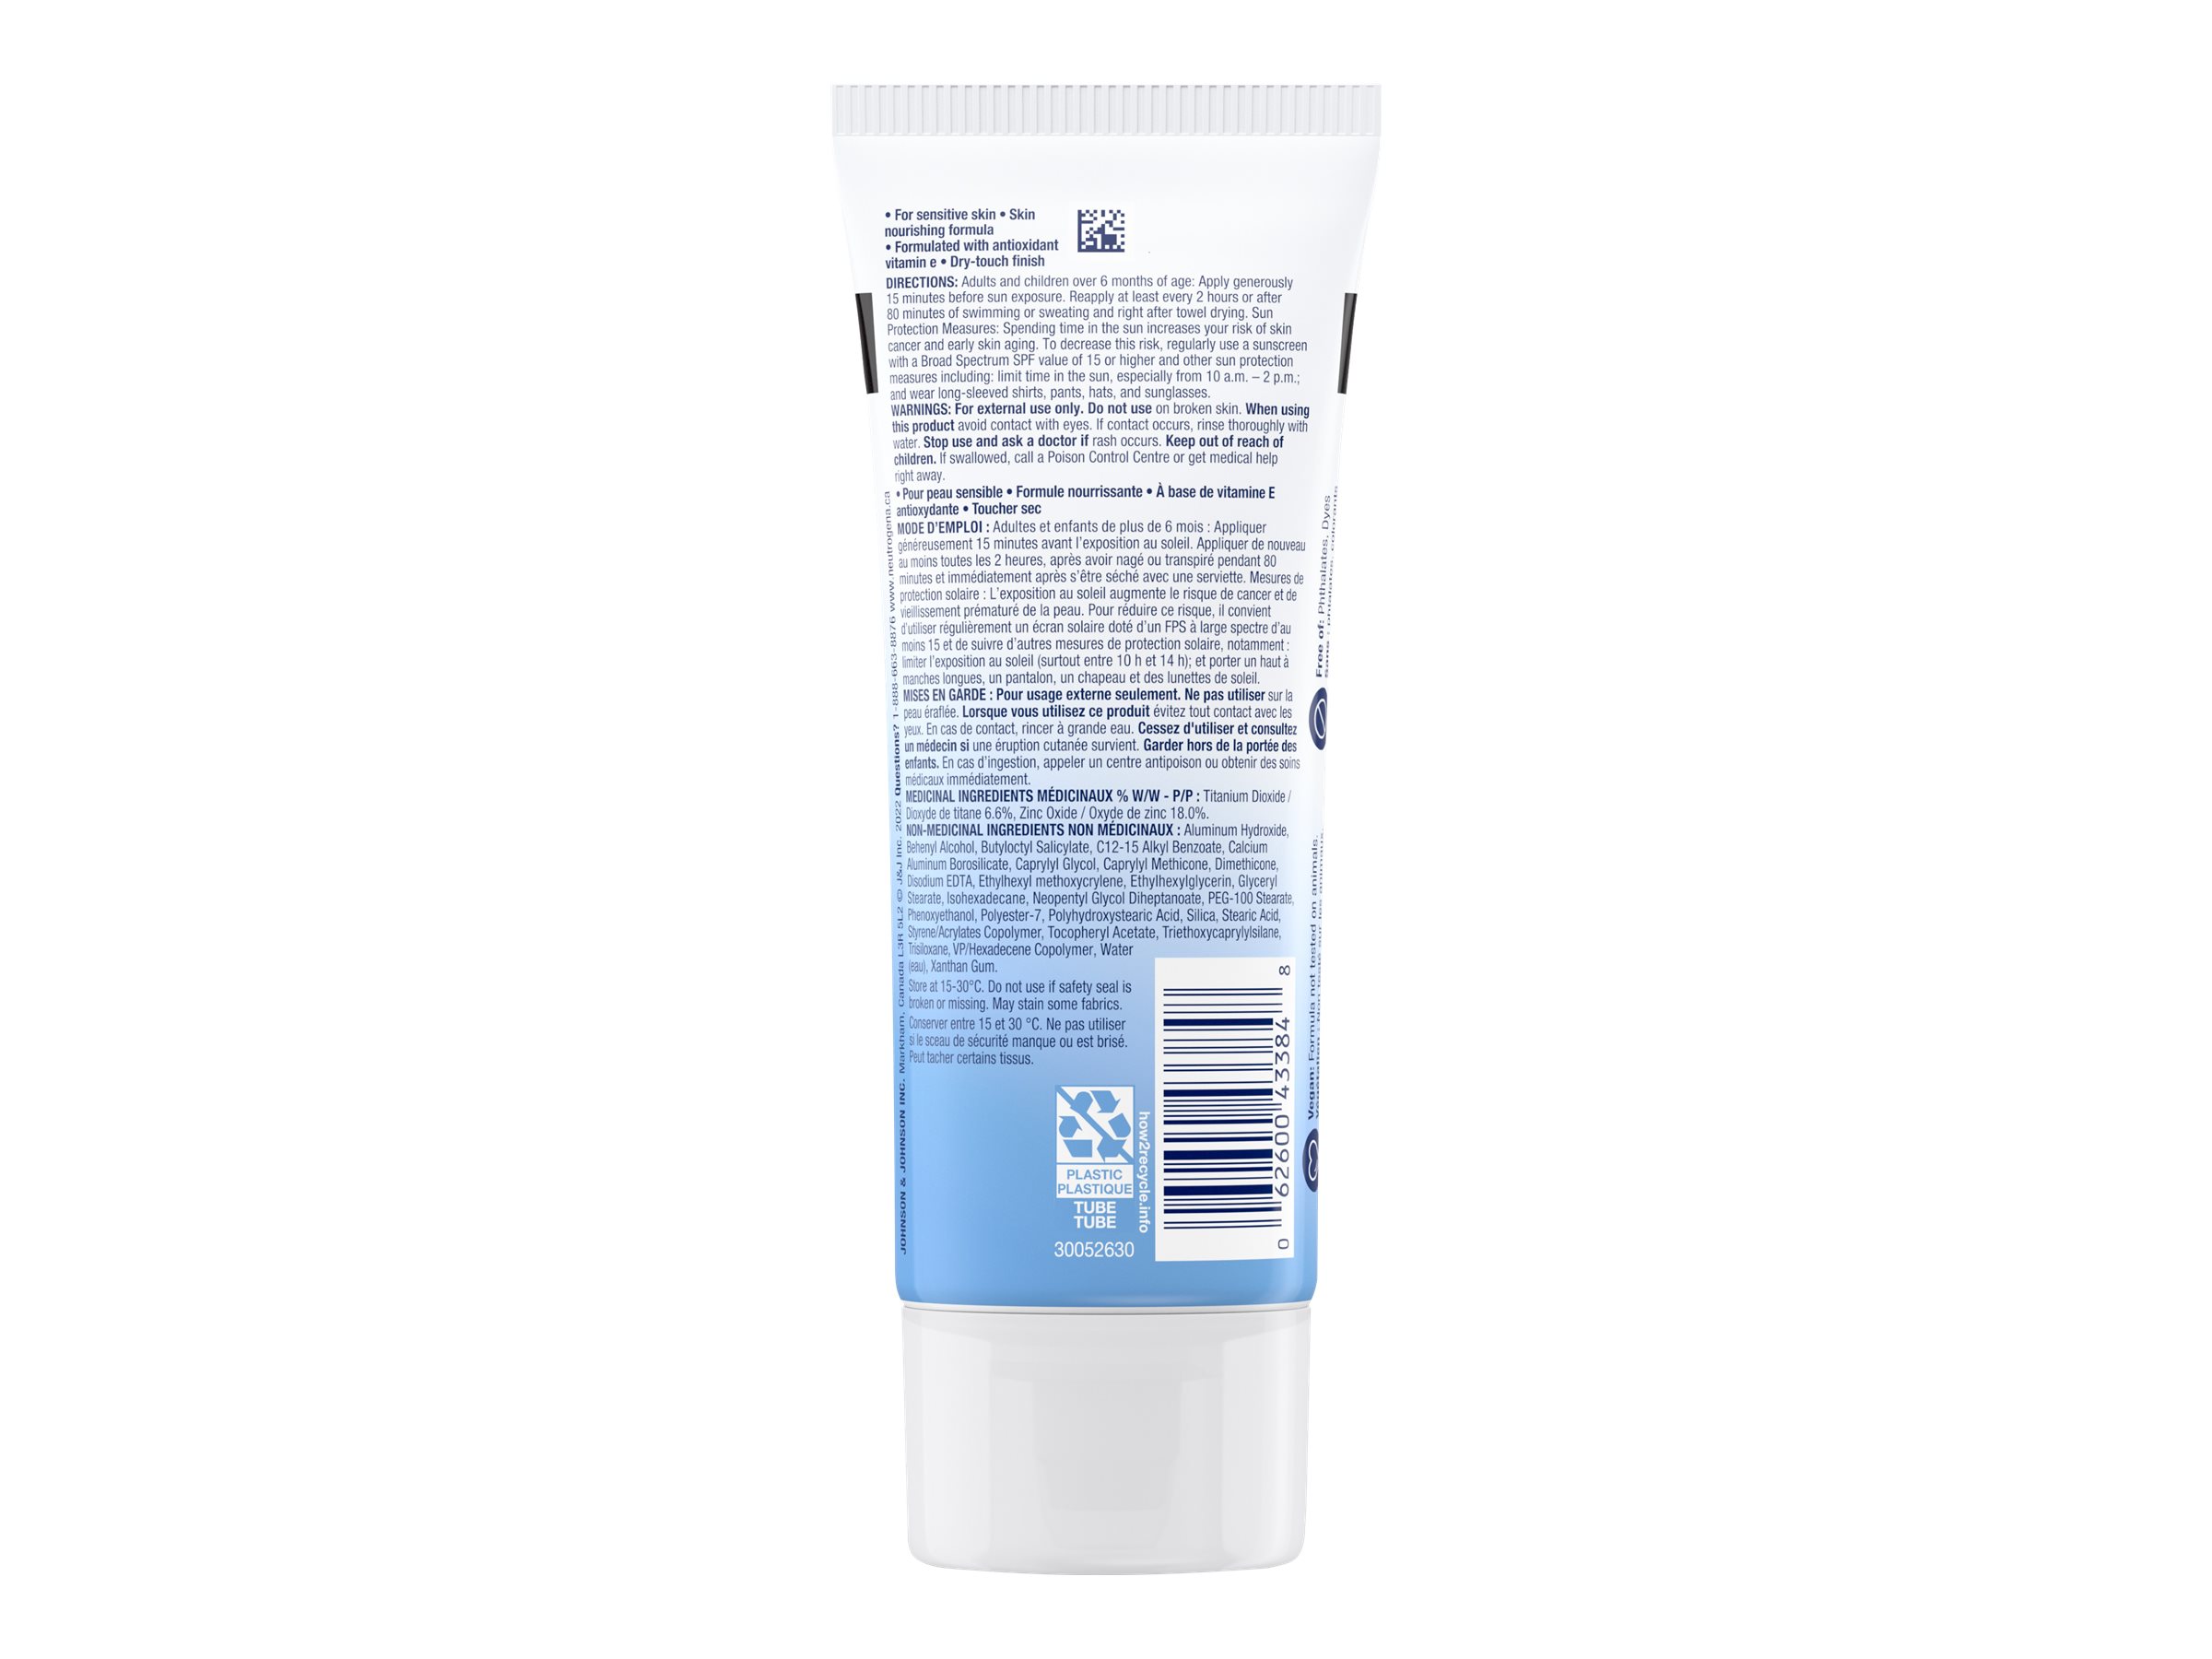 Neutrogena Mineral Ultra Sheer Dry-Touch Sunscreen - SPF 30 - 88ml